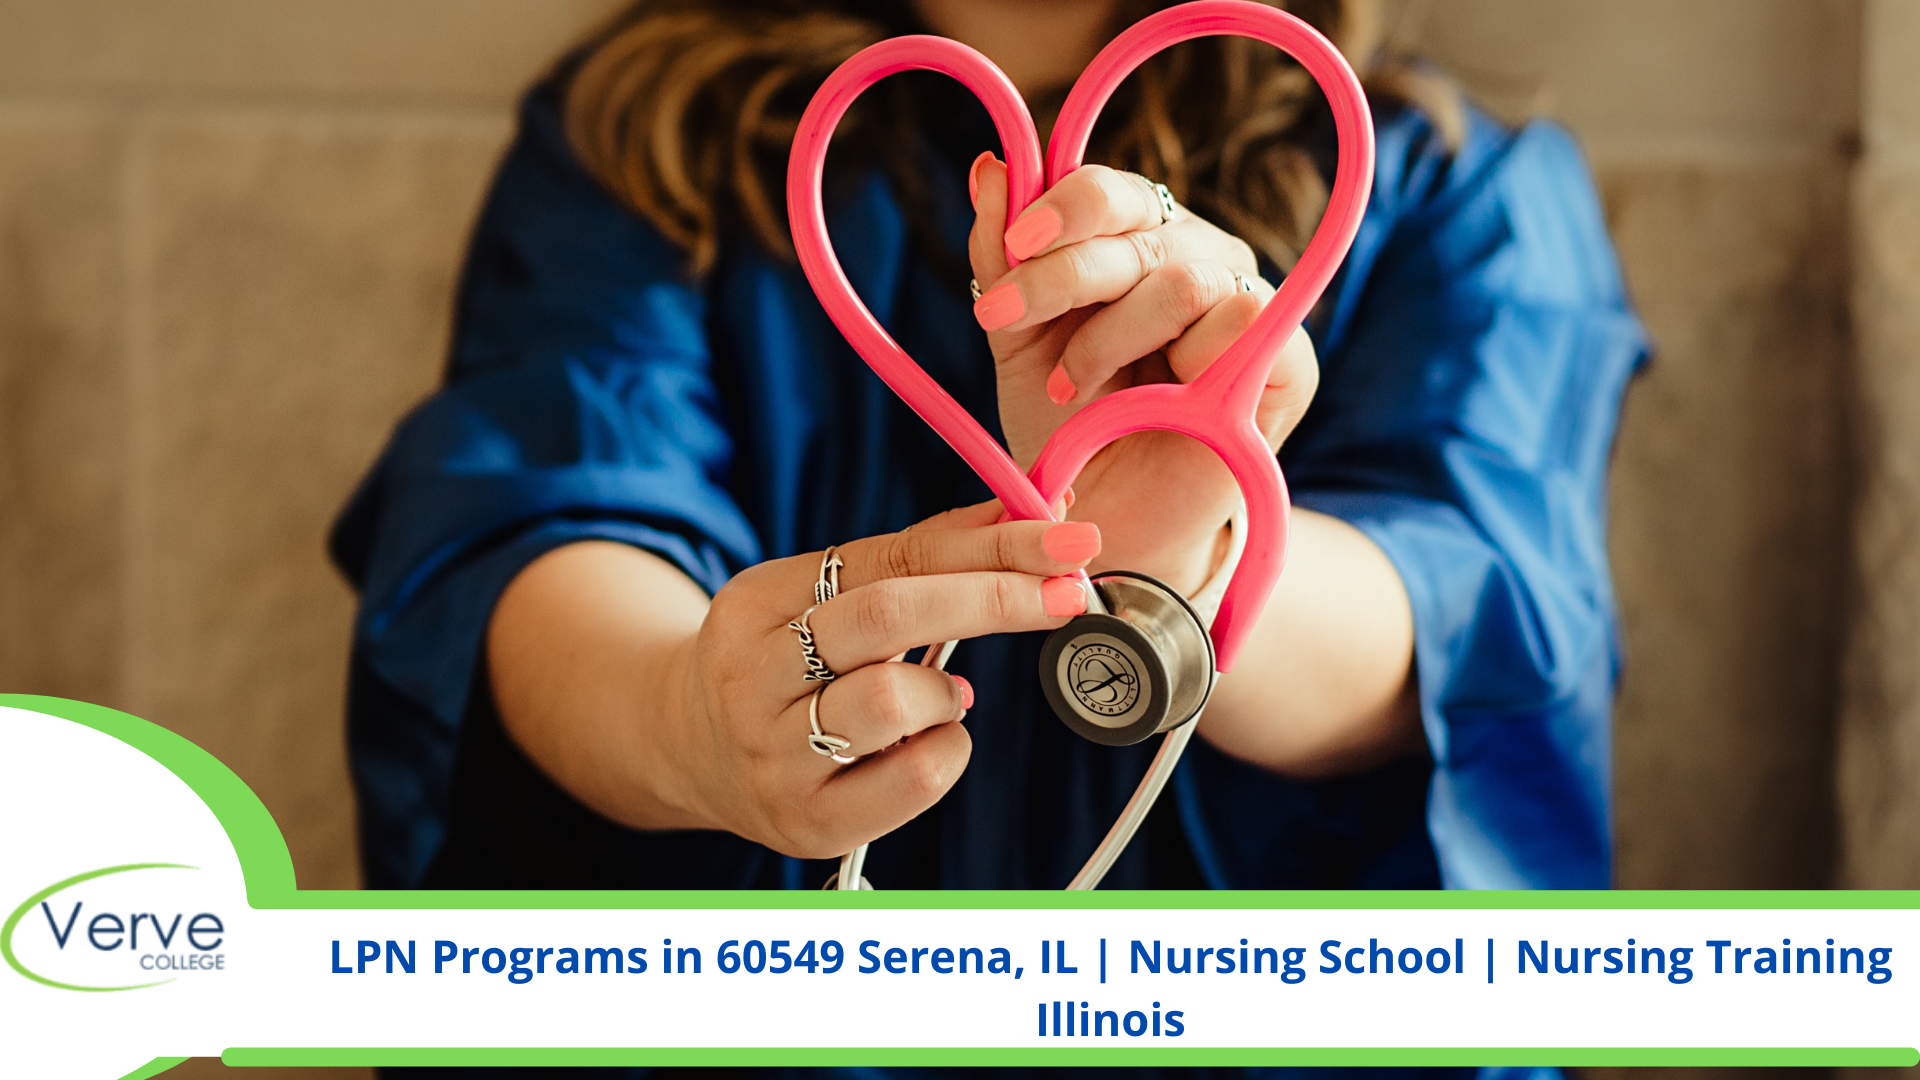 LPN Programs in 60549 Serena, IL | Nursing School | Nursing Training Illinois